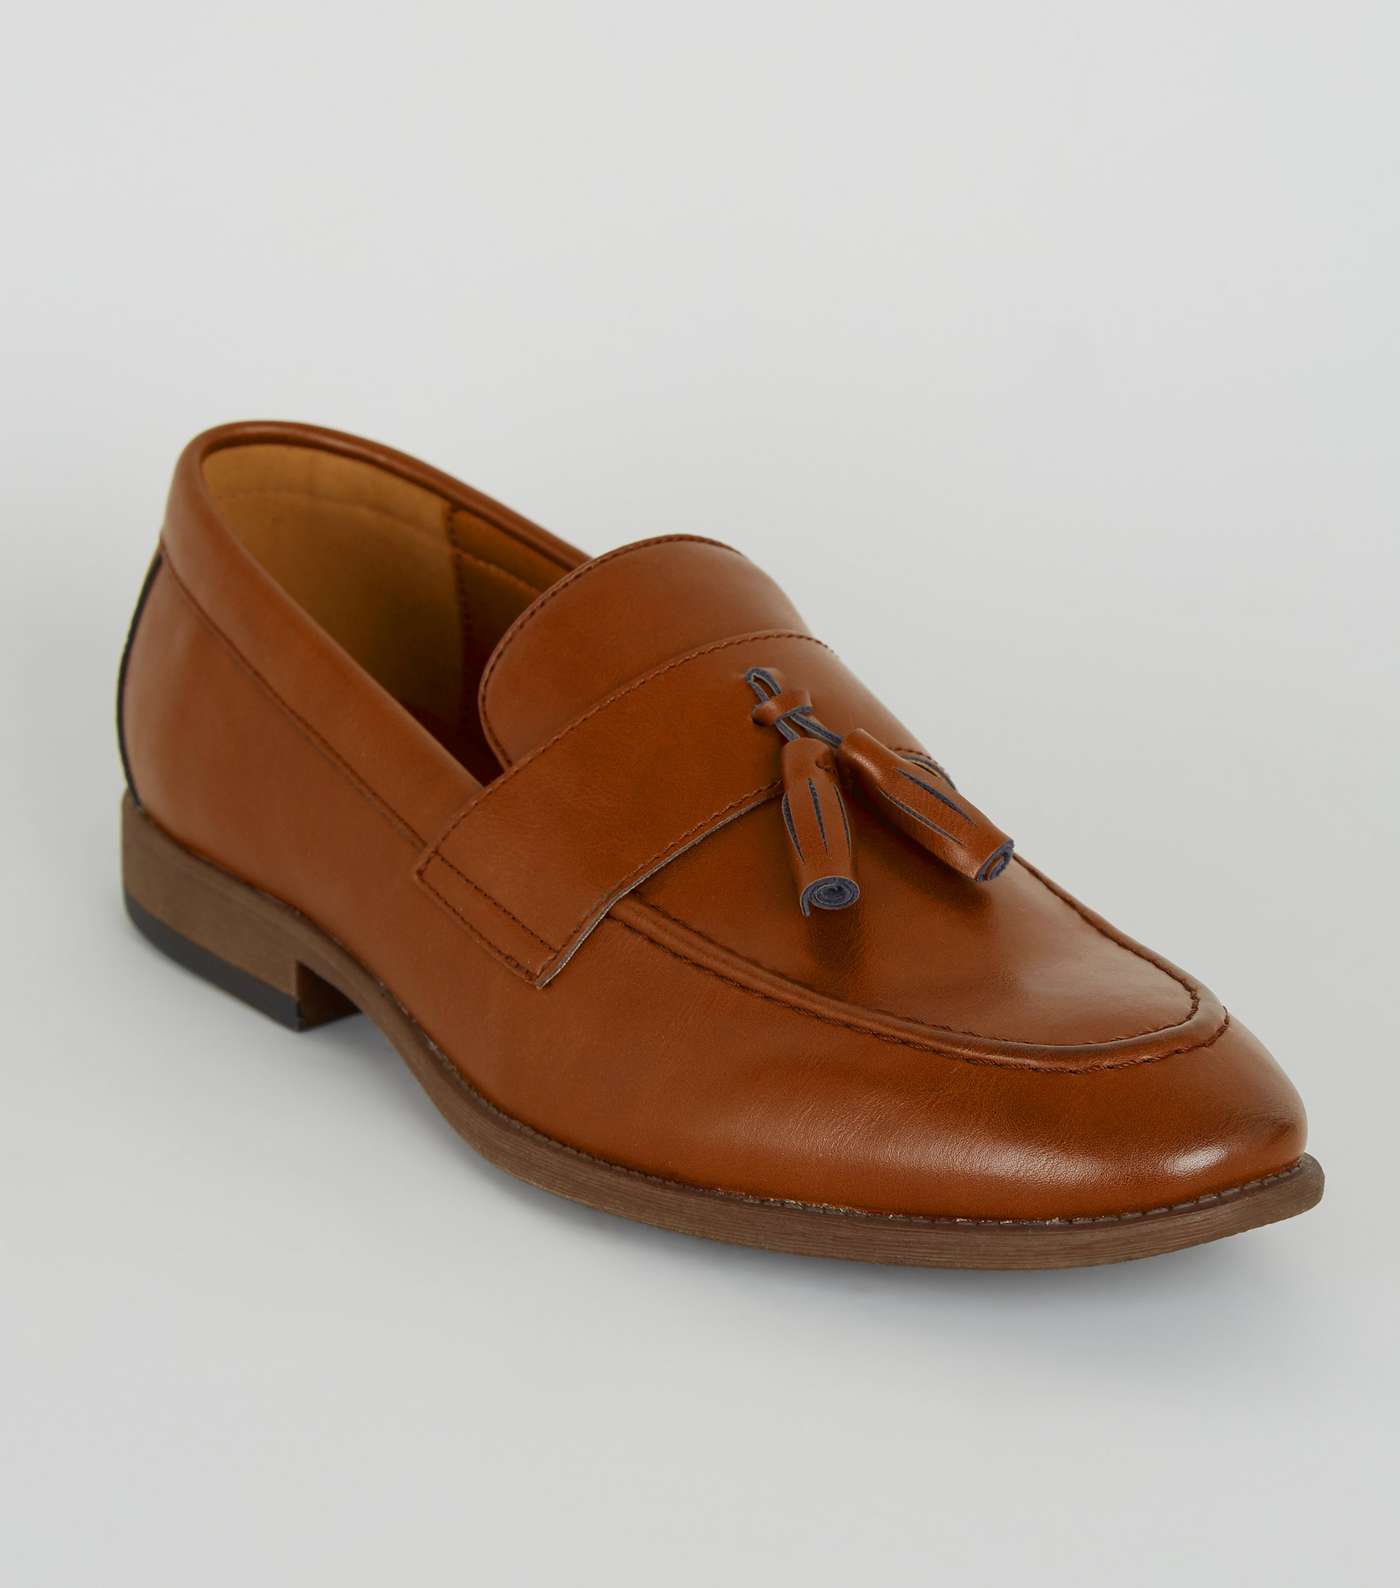 Tan Leather-Look Tassel Trim Loafers